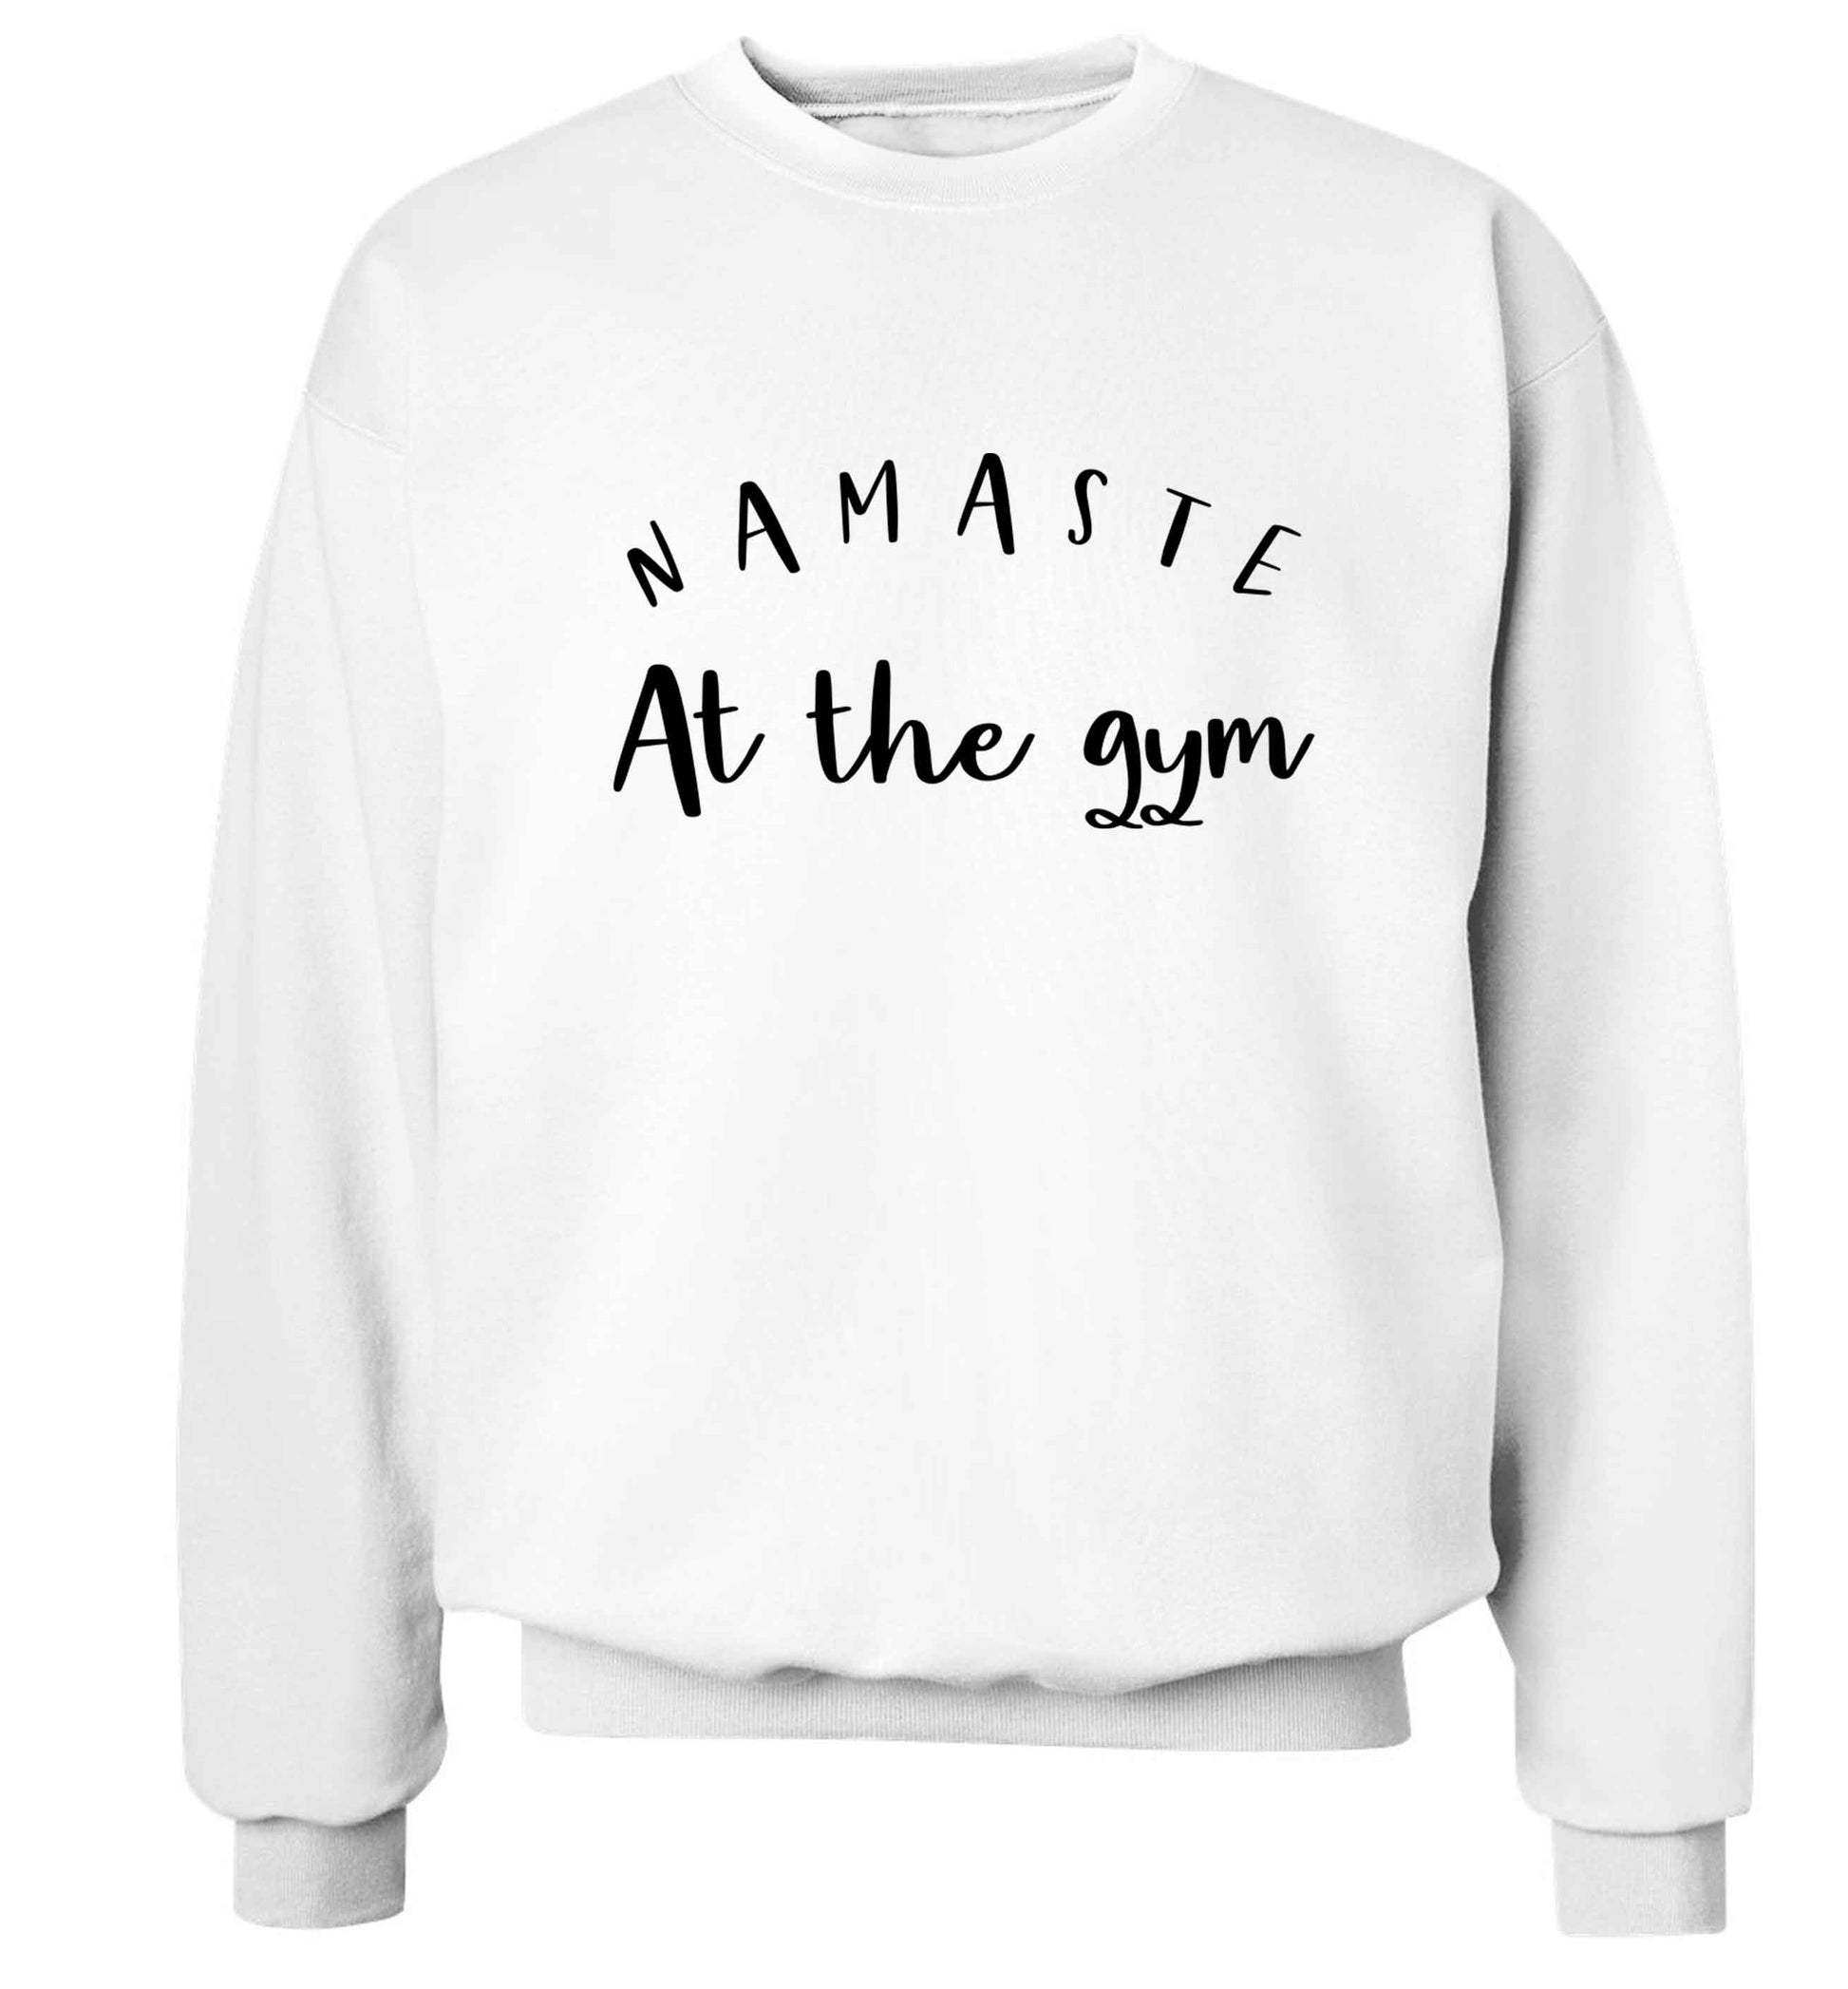 Namaste at the gym Adult's unisex white Sweater 2XL